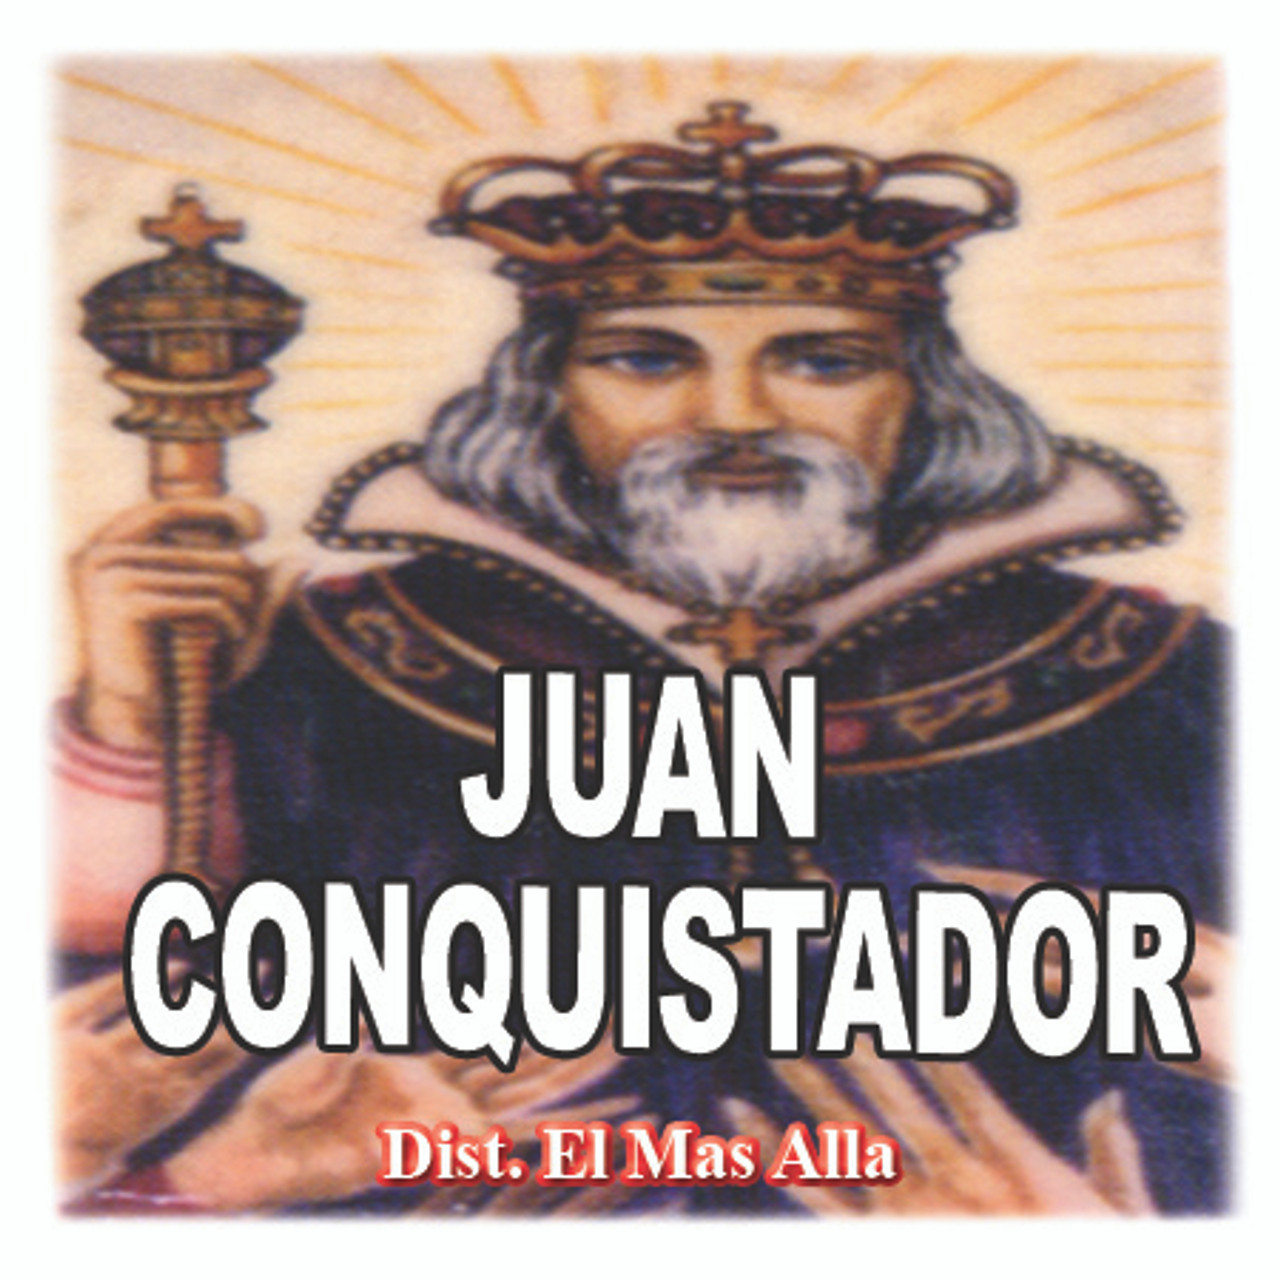 Aceite John Conquistador